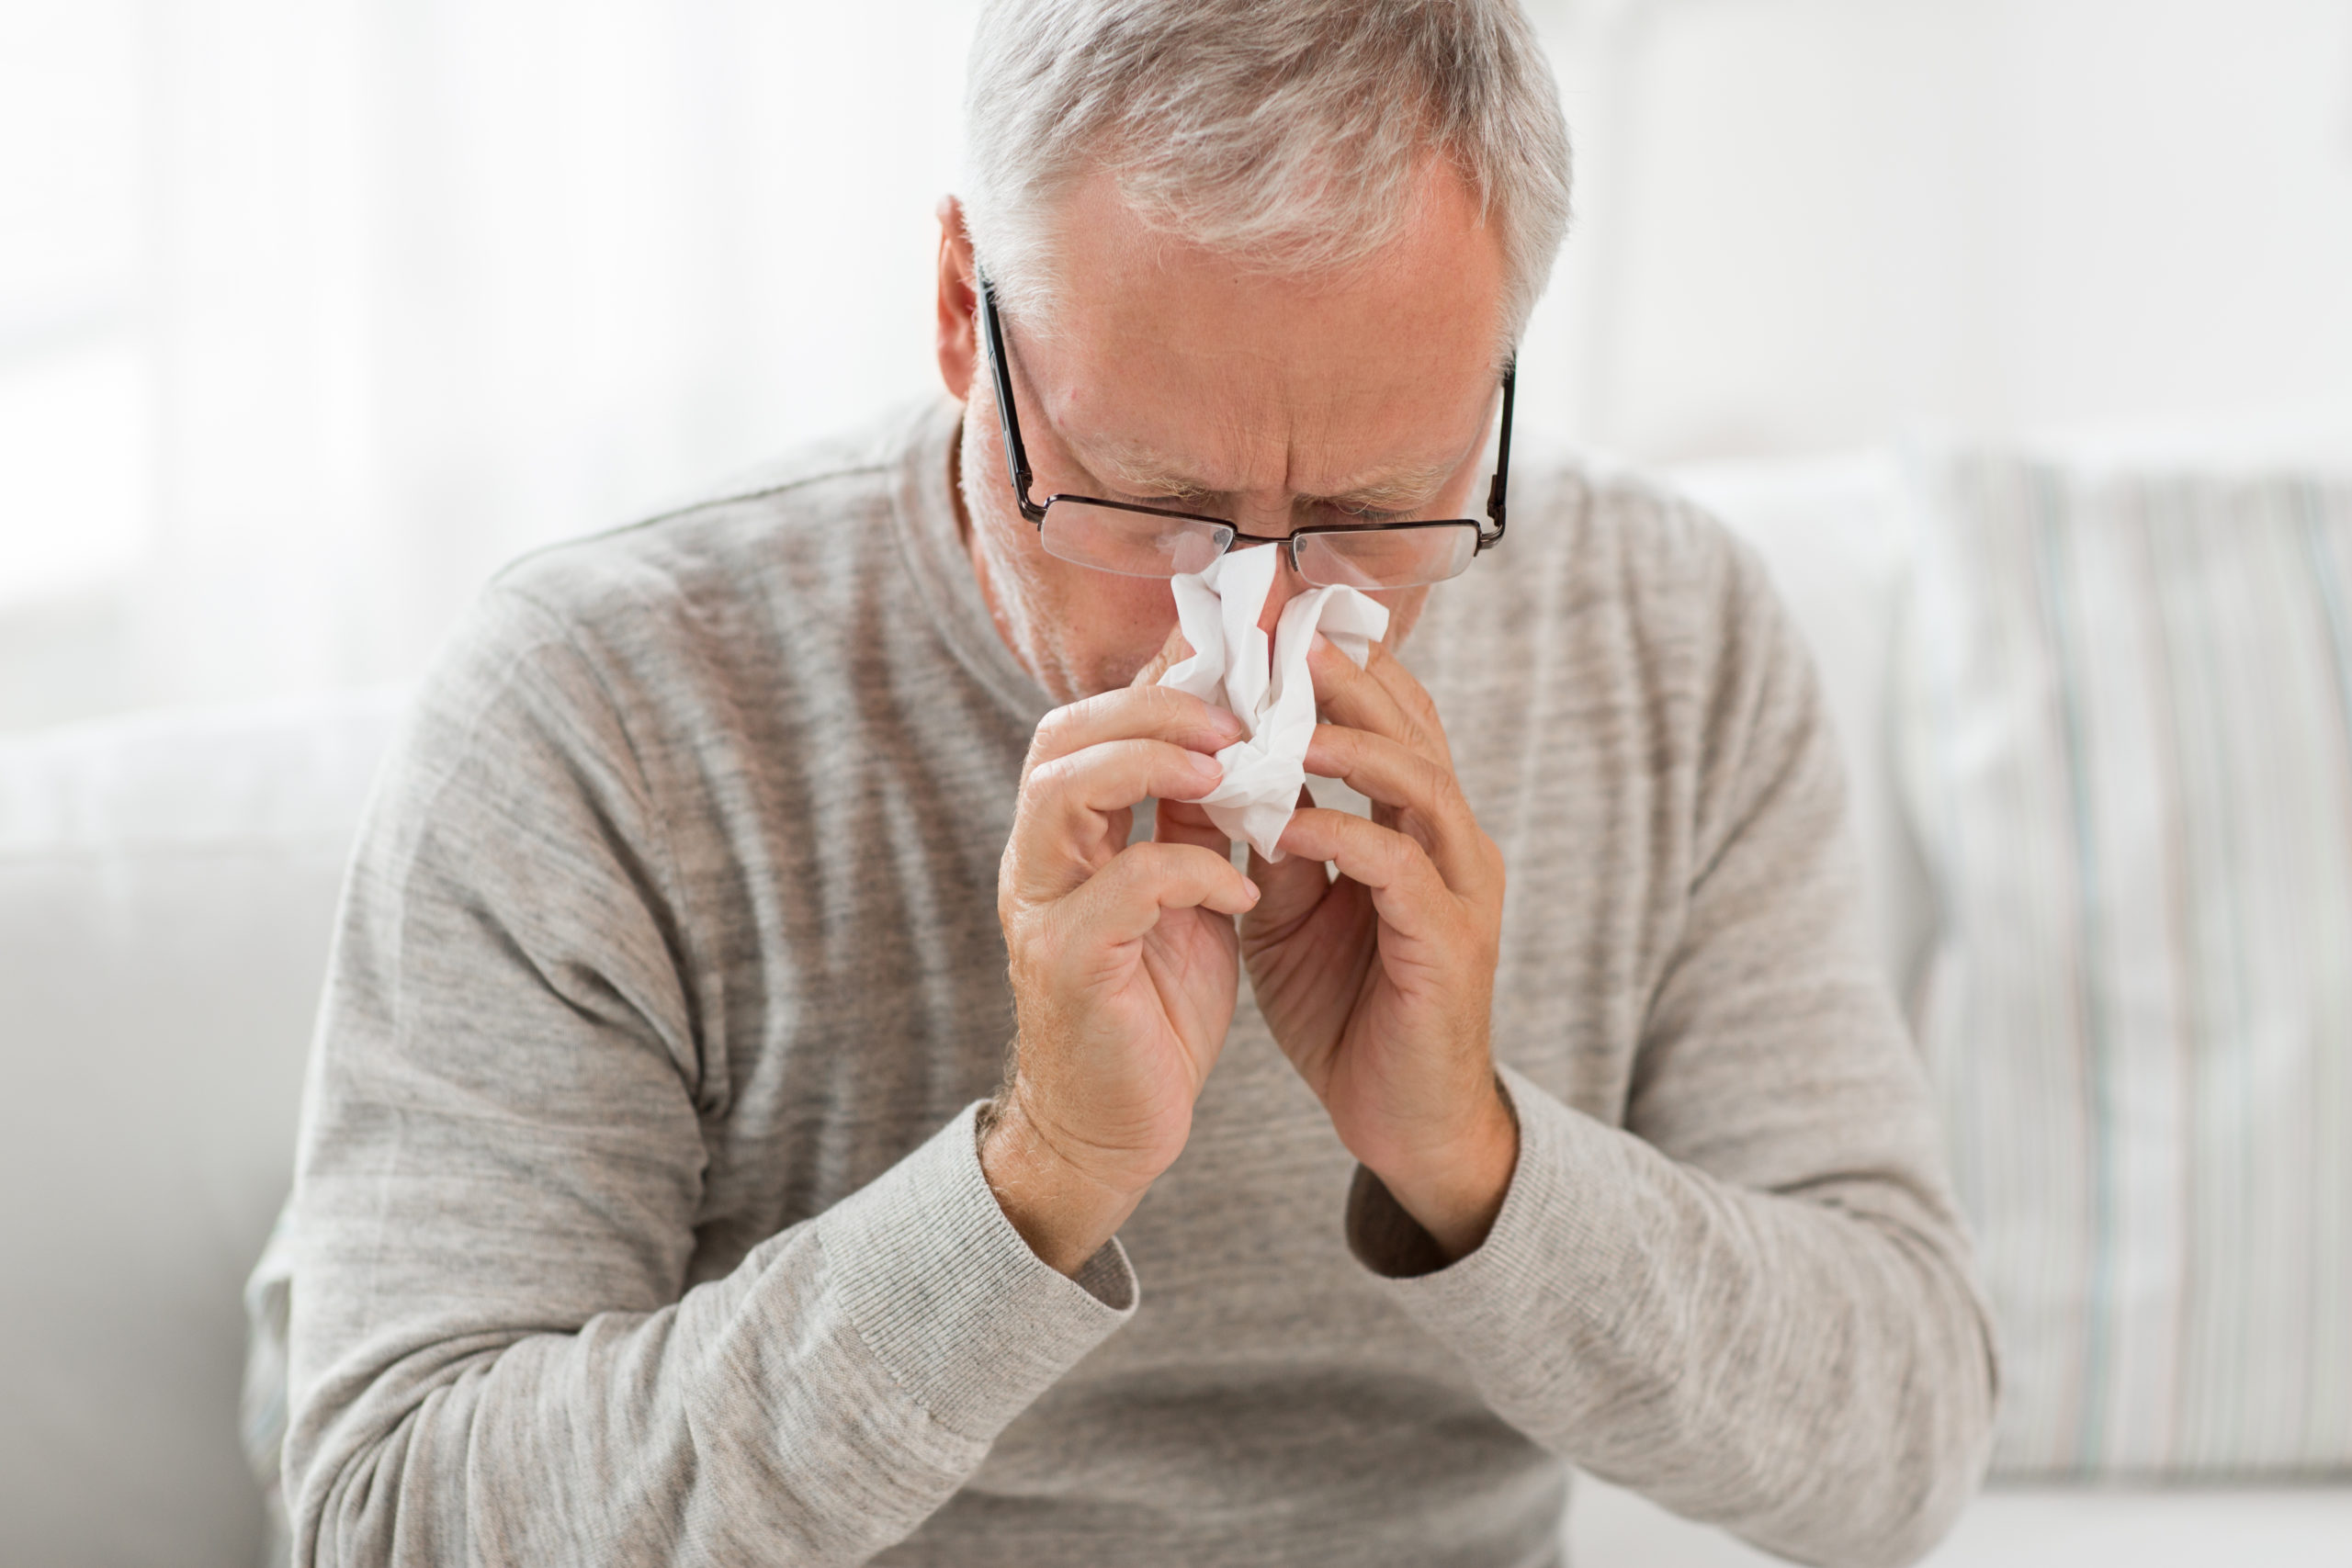 Senior man blows his nose due to allergy symptoms.